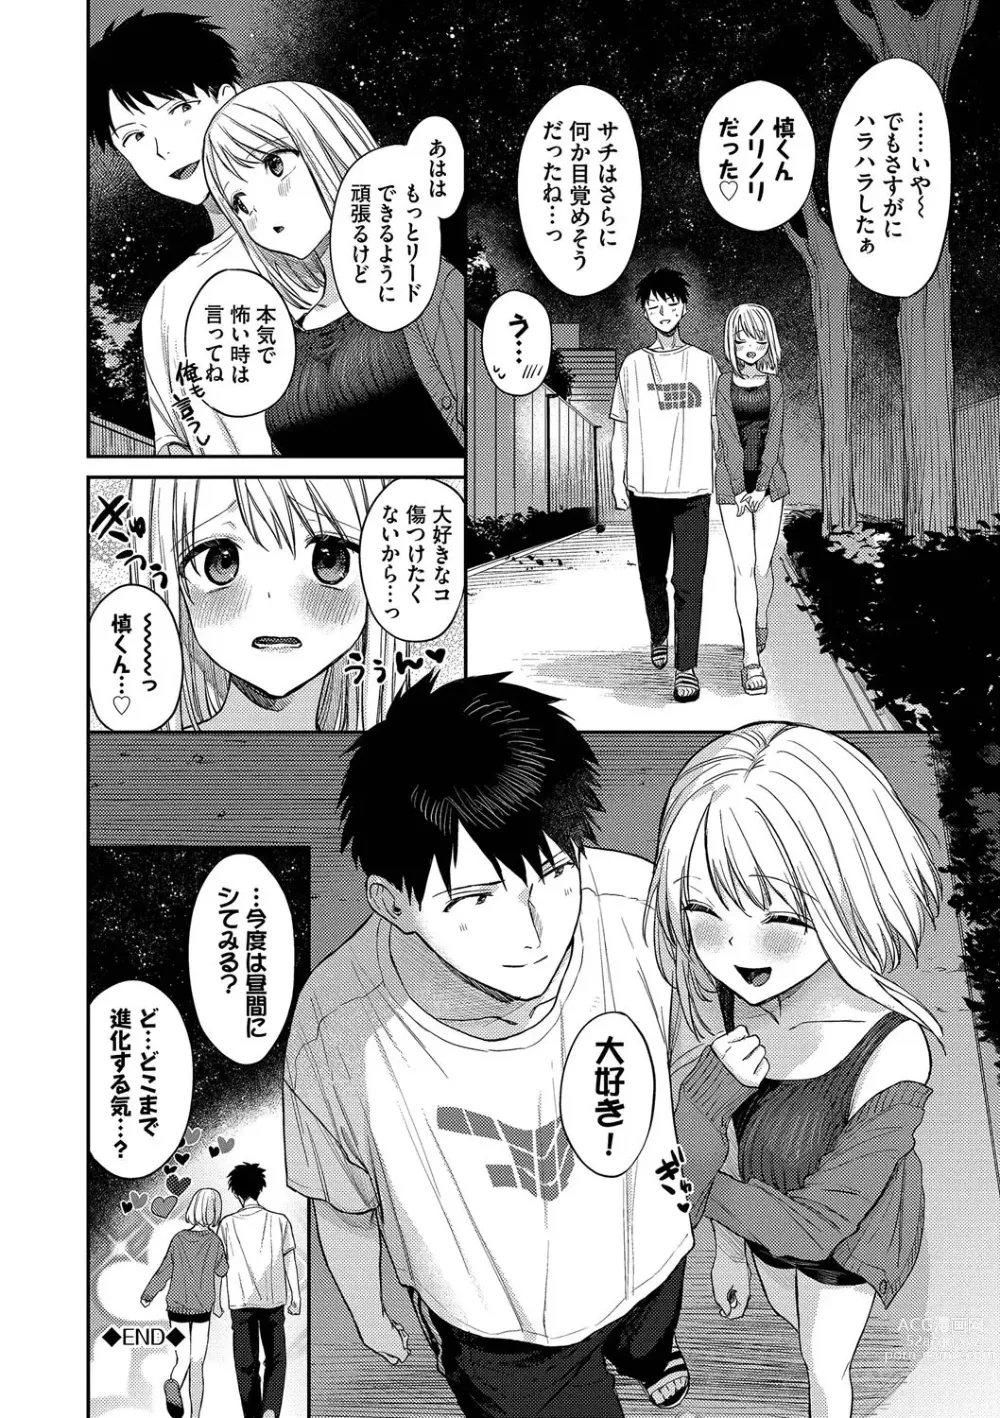 Page 201 of manga Mutsuri Bloom